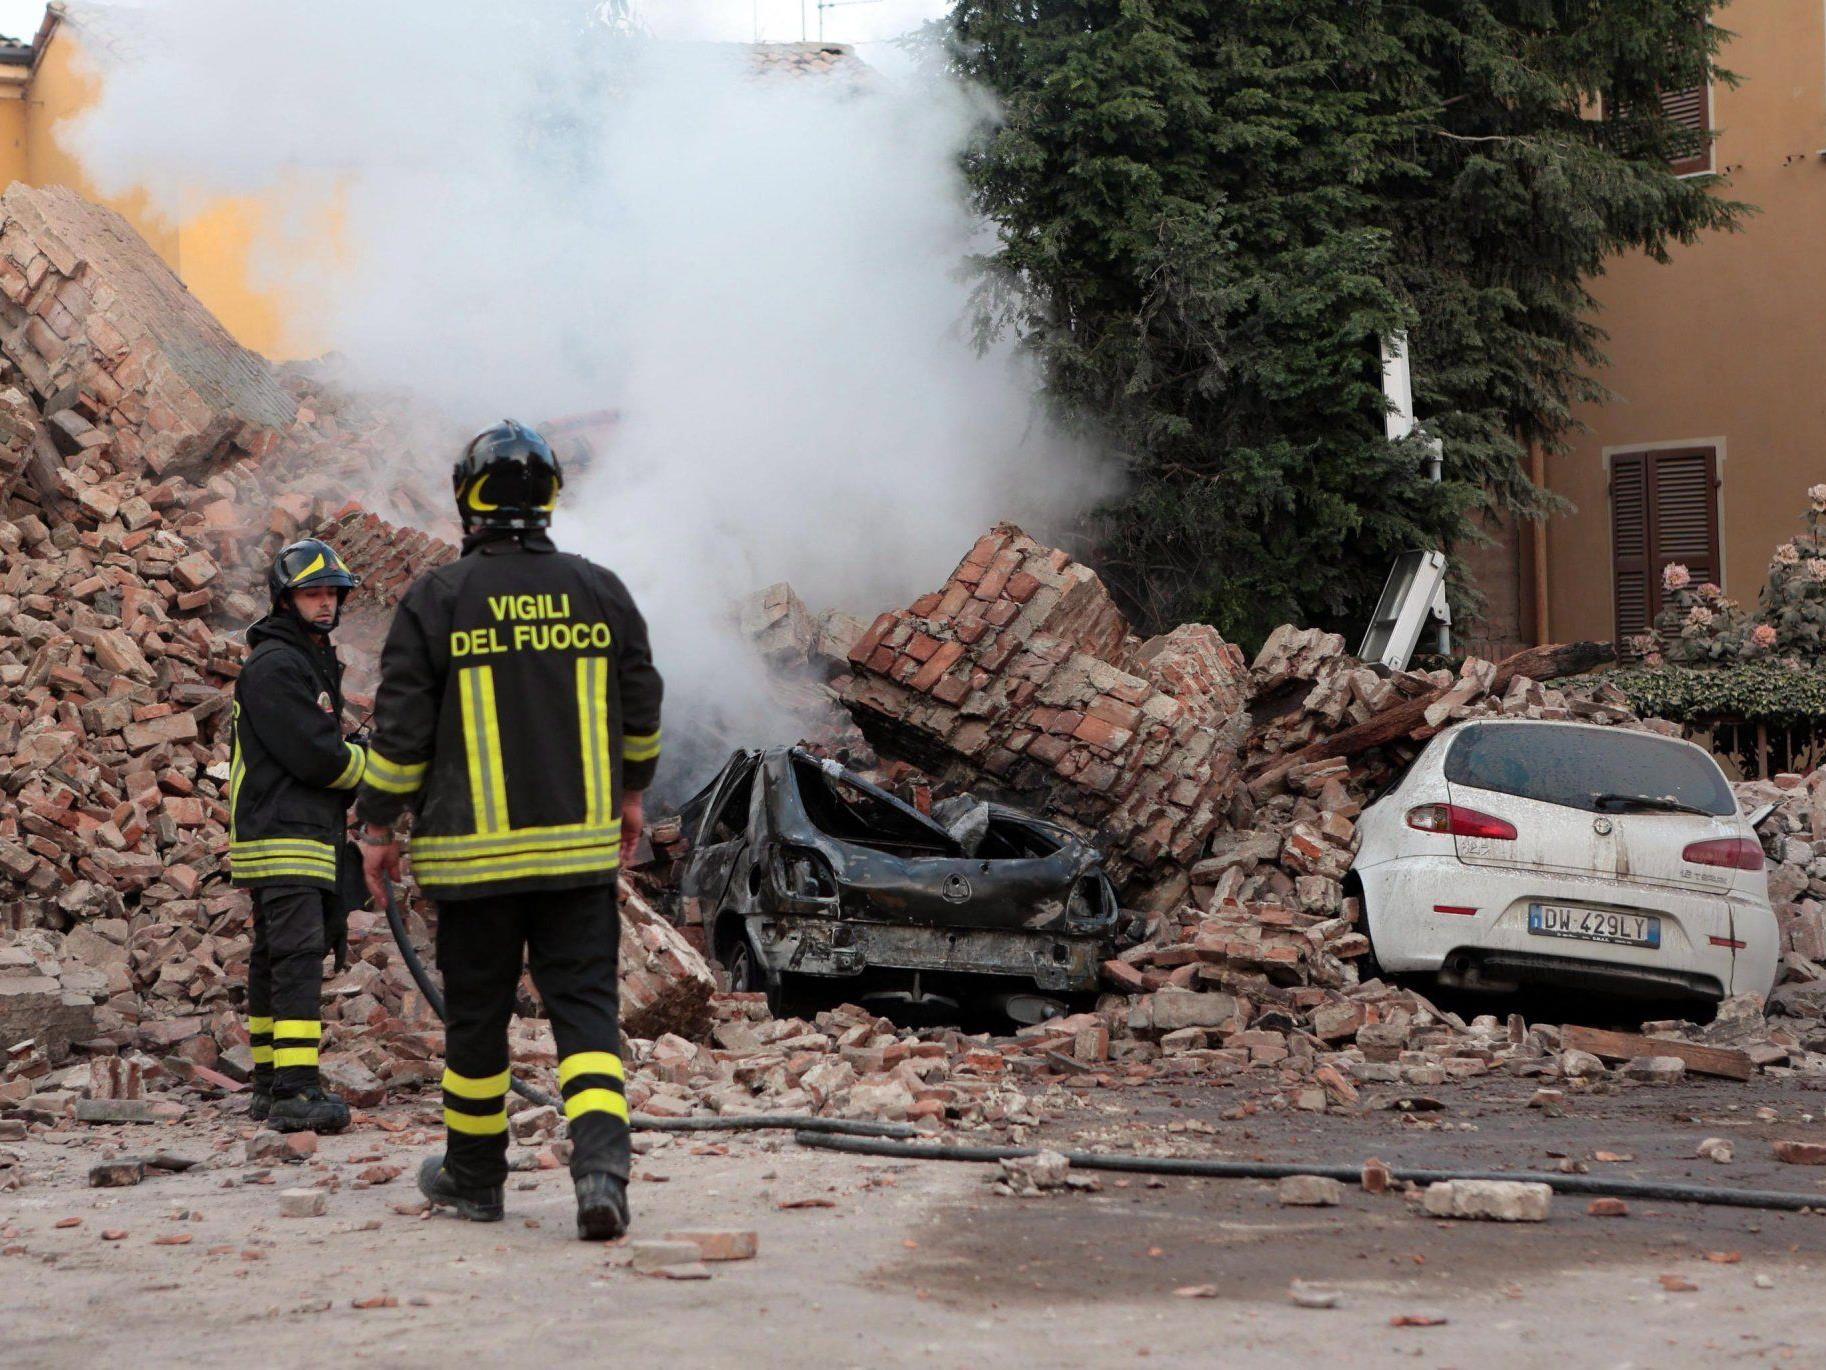 Bilder der Zerstörung nach dem verheerenden Beben in Norditalien.